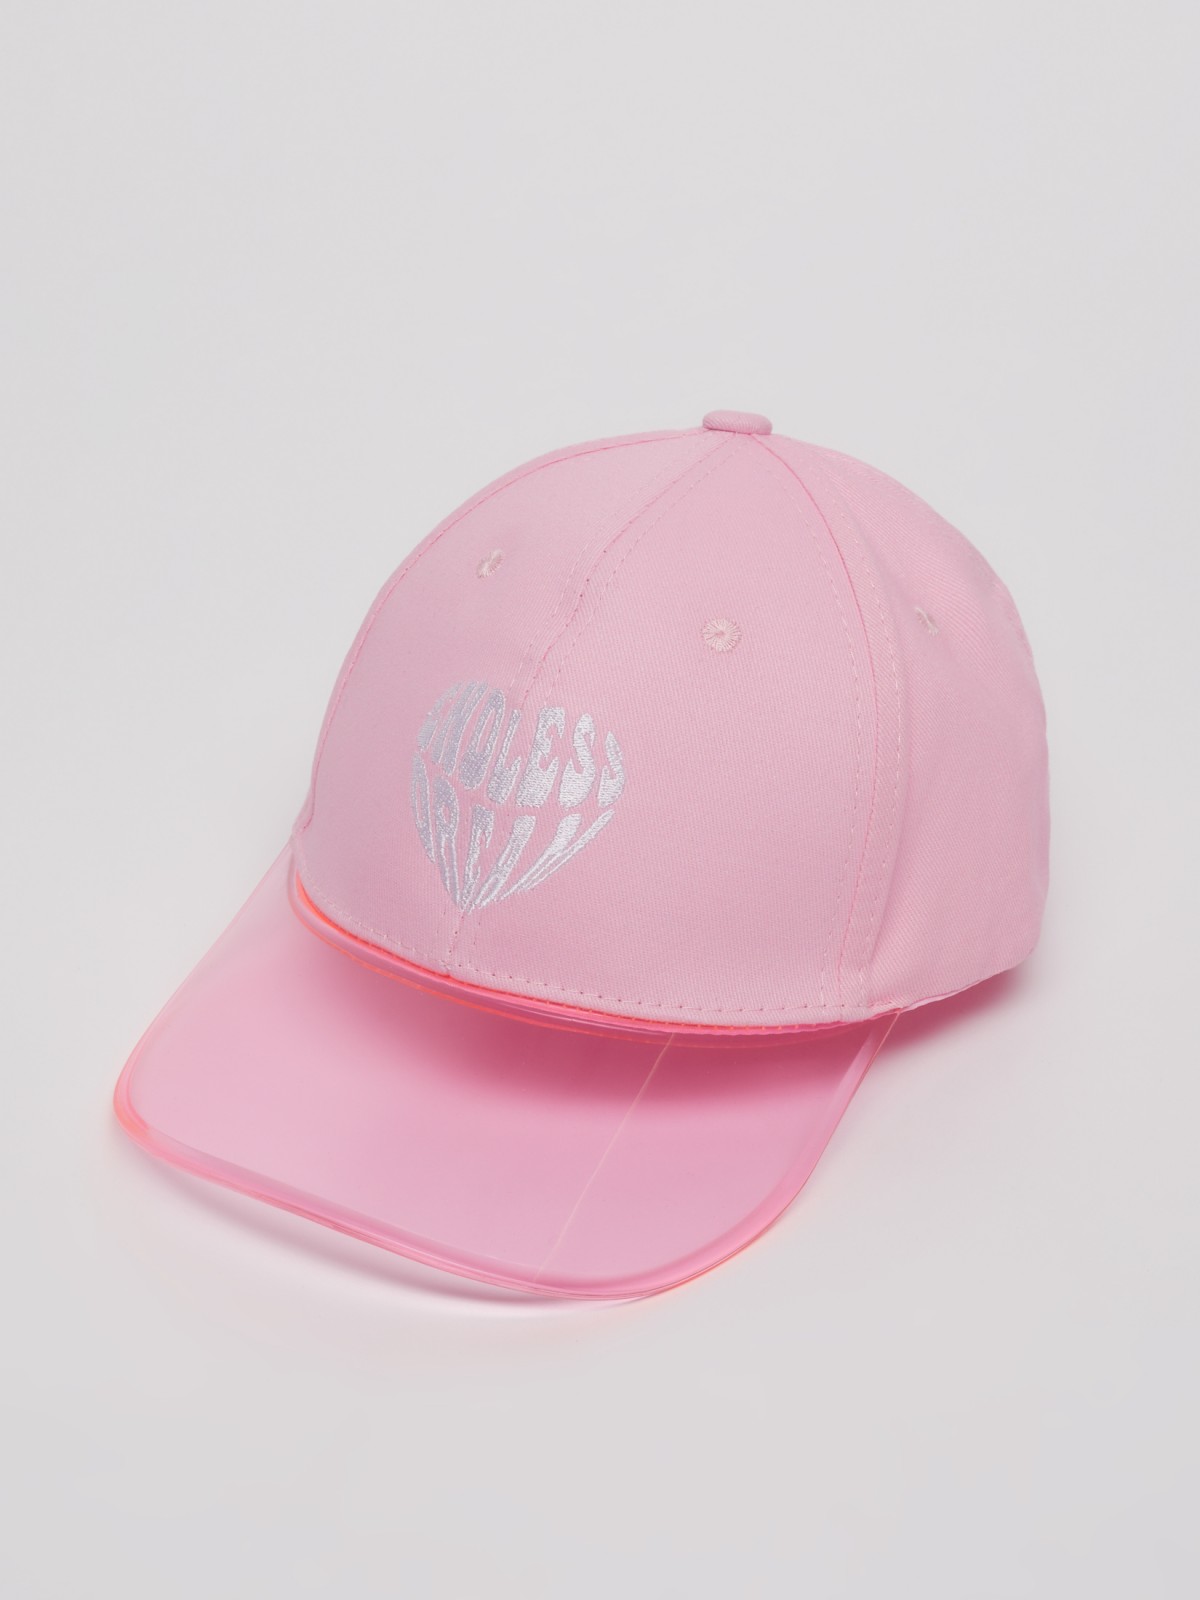 Кепка zolla 023239F59135, цвет розовый, размер 54-58